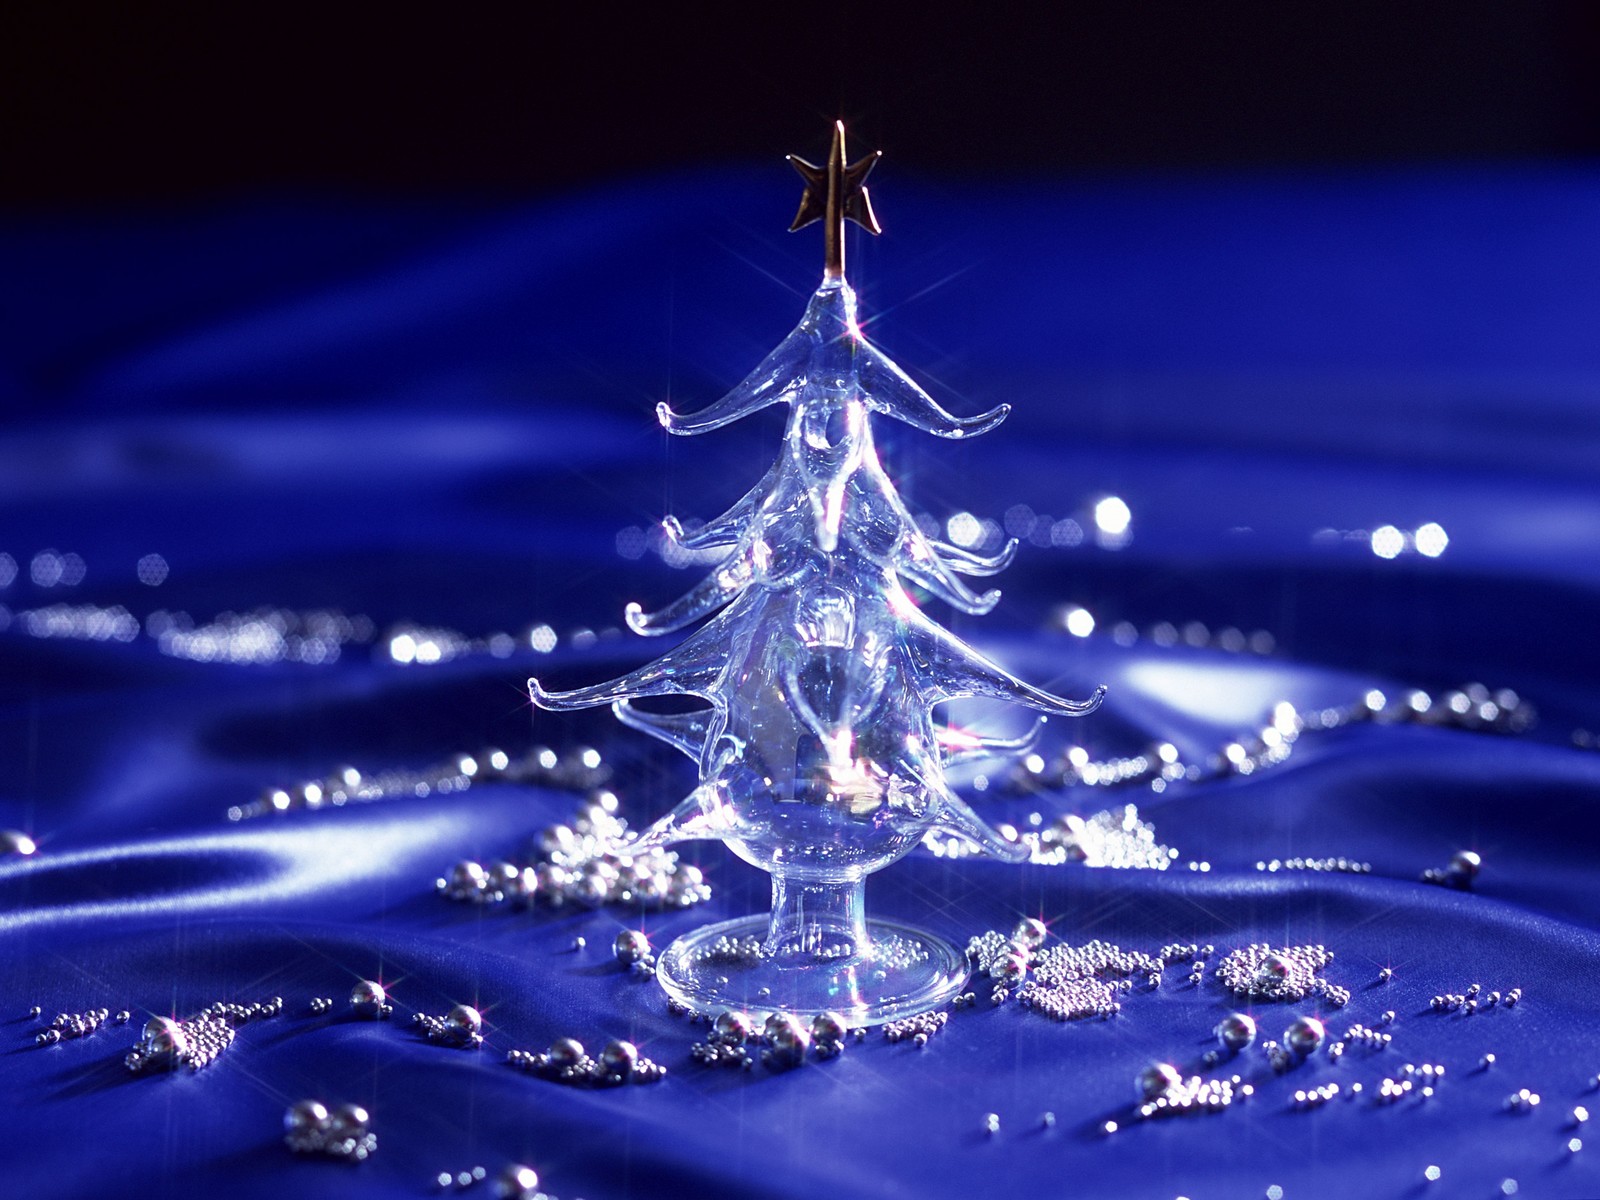 https://blogger.googleusercontent.com/img/b/R29vZ2xl/AVvXsEjuNB7XuN2Zzt3s7usq4i89tRVv7i4gkuNsS4wX5XreUfm040qgkL4hChYwf44FjO2Xa6hhxFHVtPOUJ73GGUmX71RE0A7bs0Ae_KBJ80ZiYx3ULWnmhdM58Zl7_gkNOvd24Ty6jEIEOo_L/s1600/Crystal-Christmas-Tree-wallpapers.jpeg